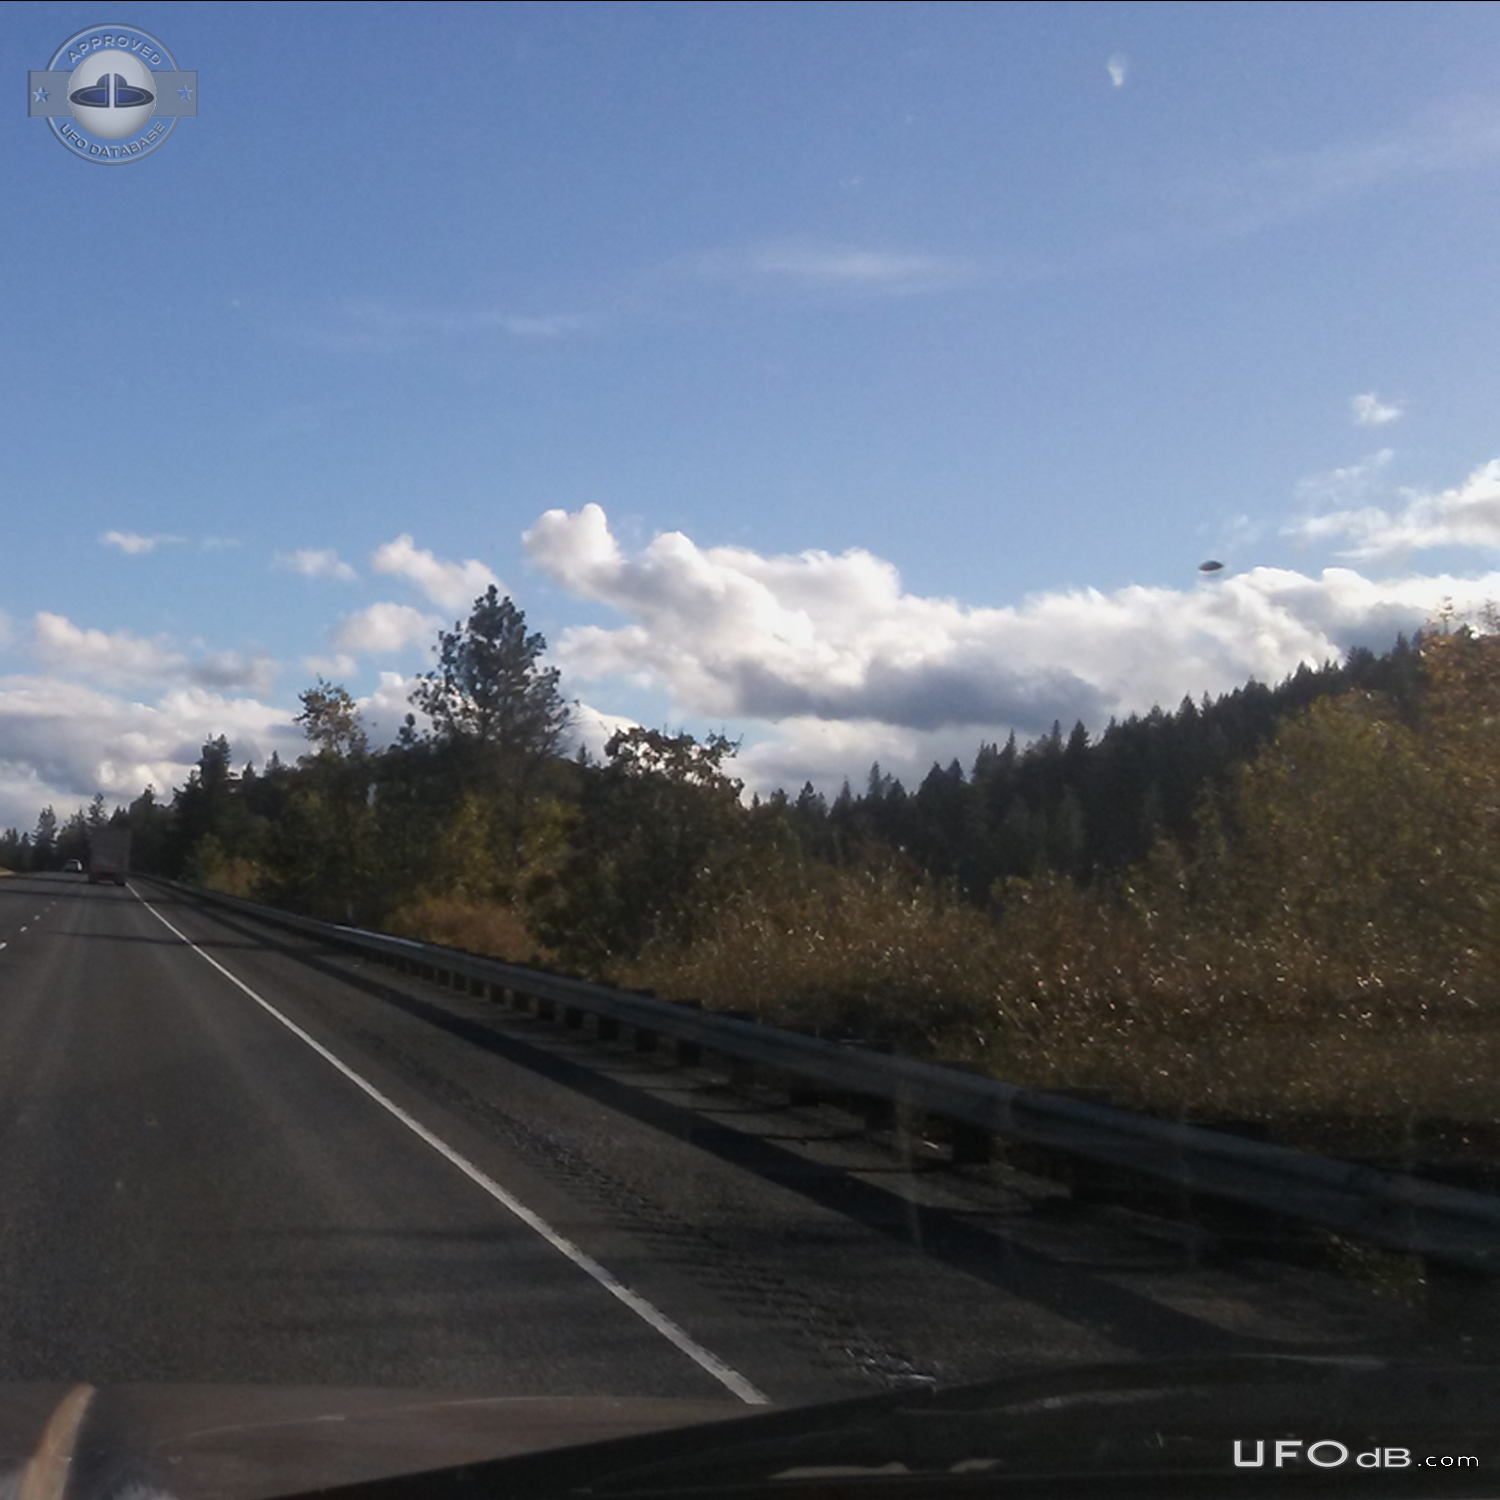 Photos near Grants Pass captured UFO on film - Merlin Oregon USA 2016 UFO Picture #807-2